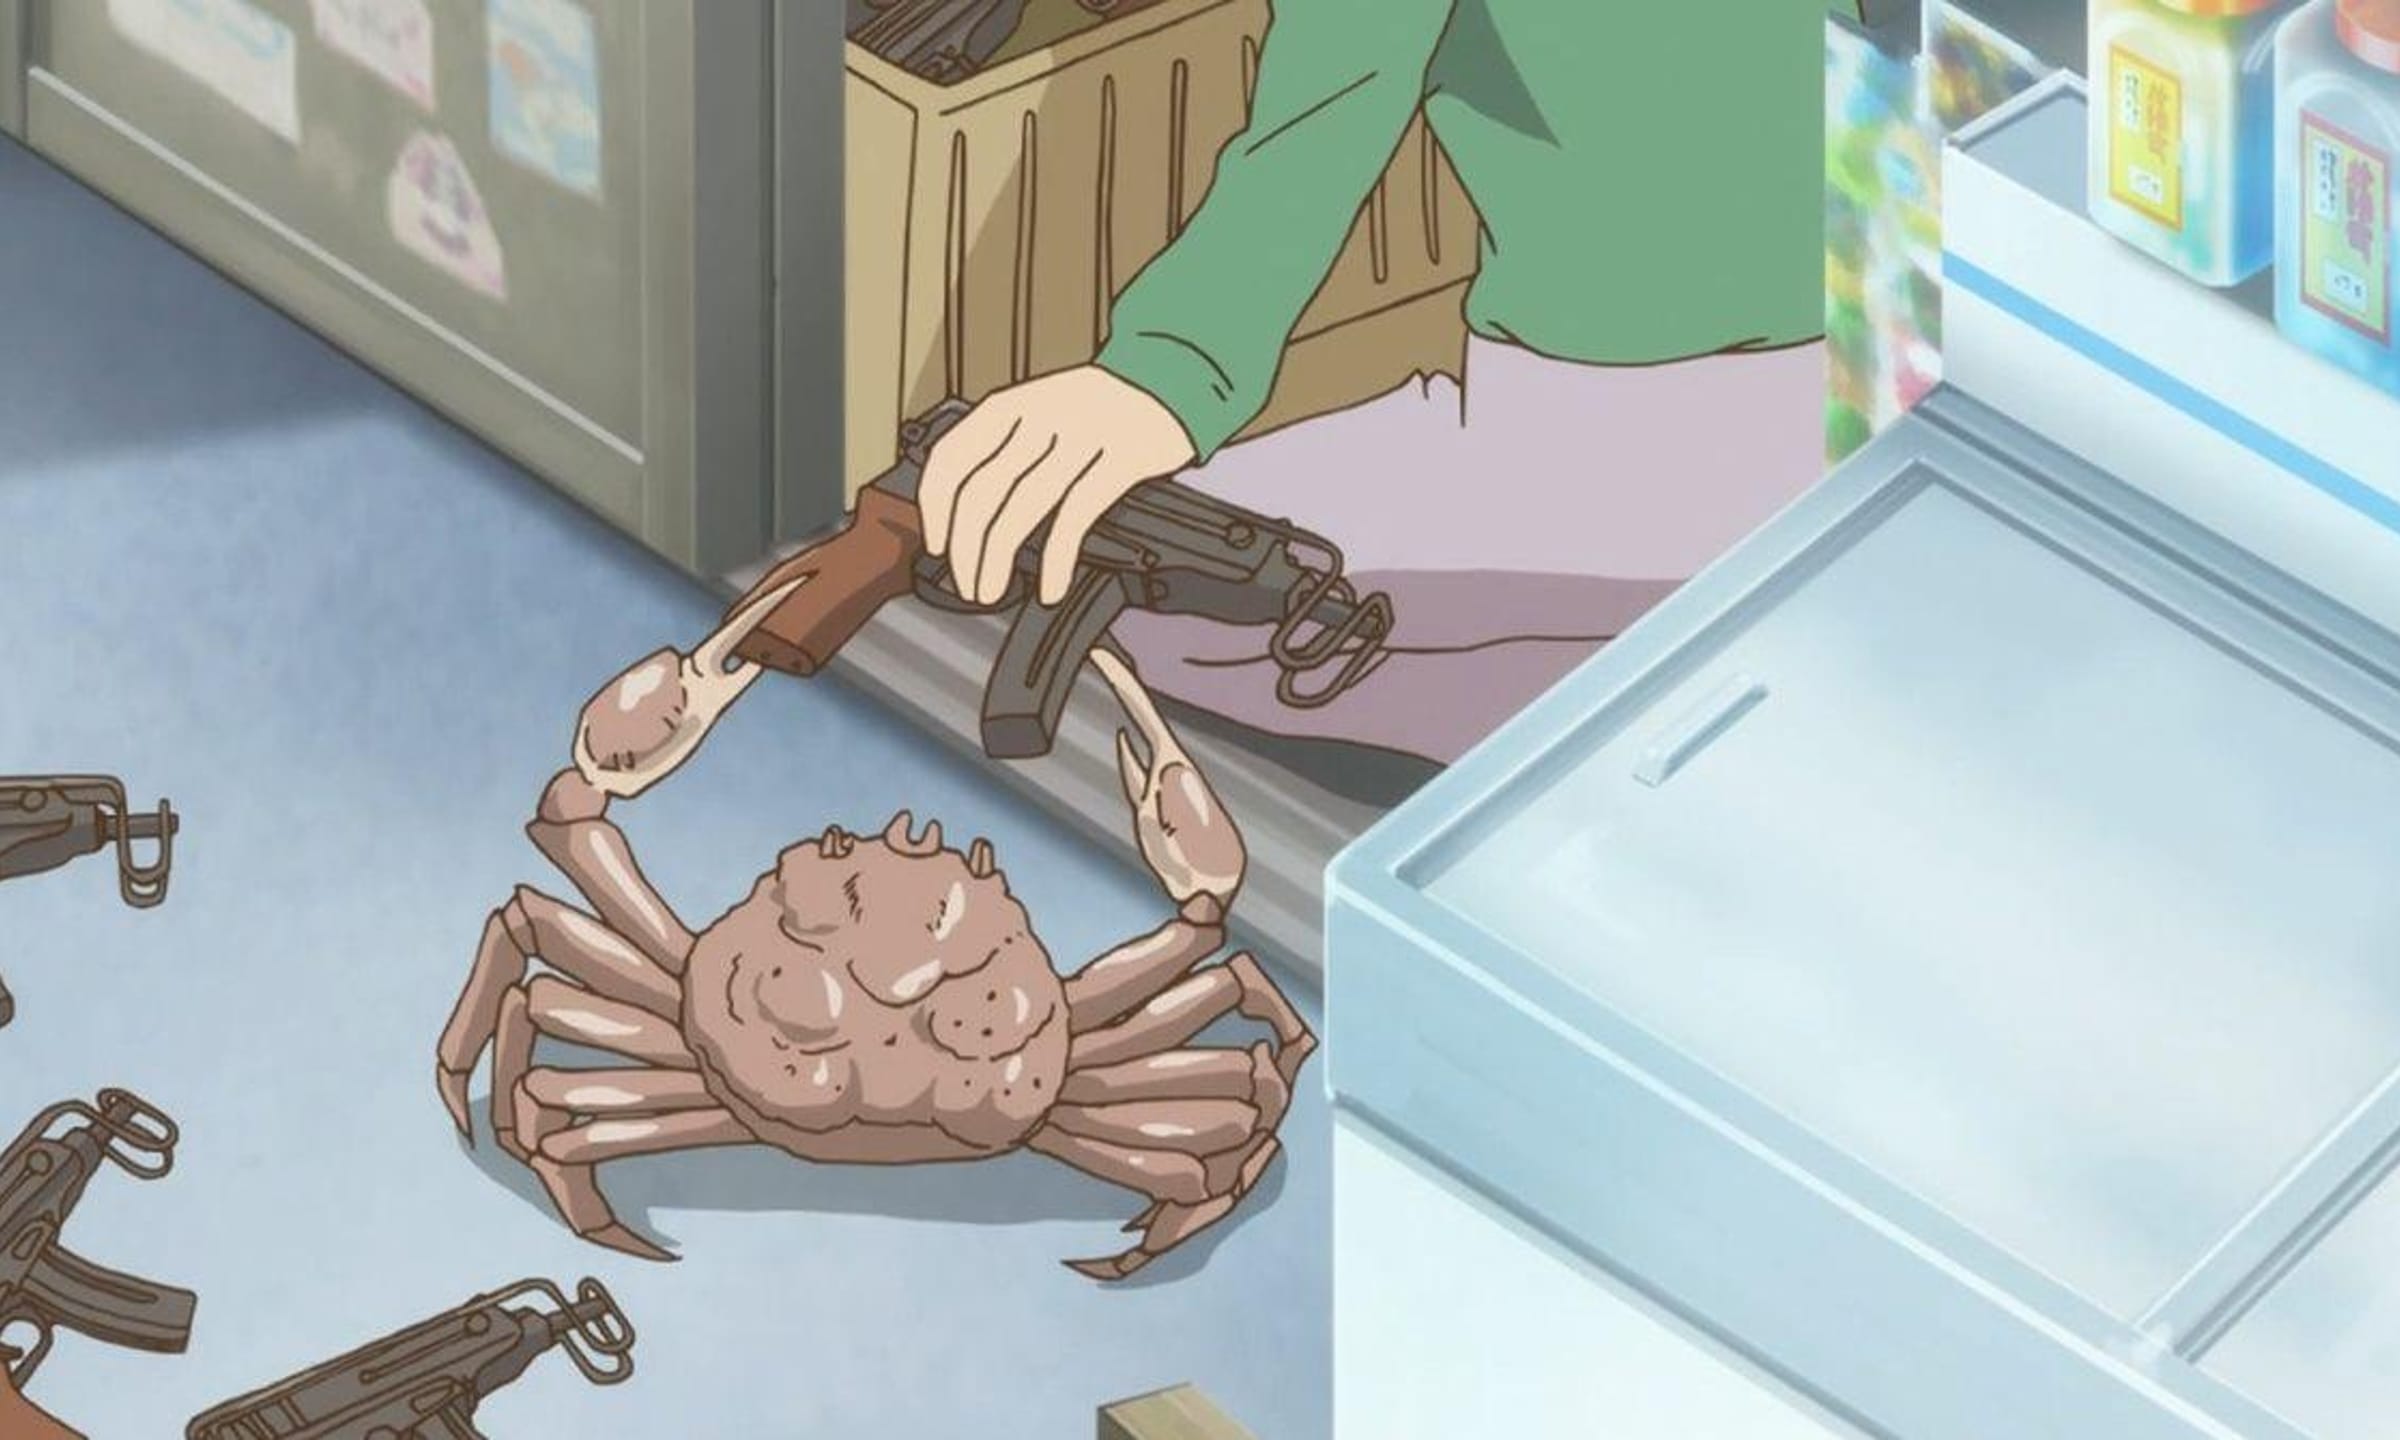 A screenshot taken from the anime "Sabagebu!" where a person is handing guns to crabs.